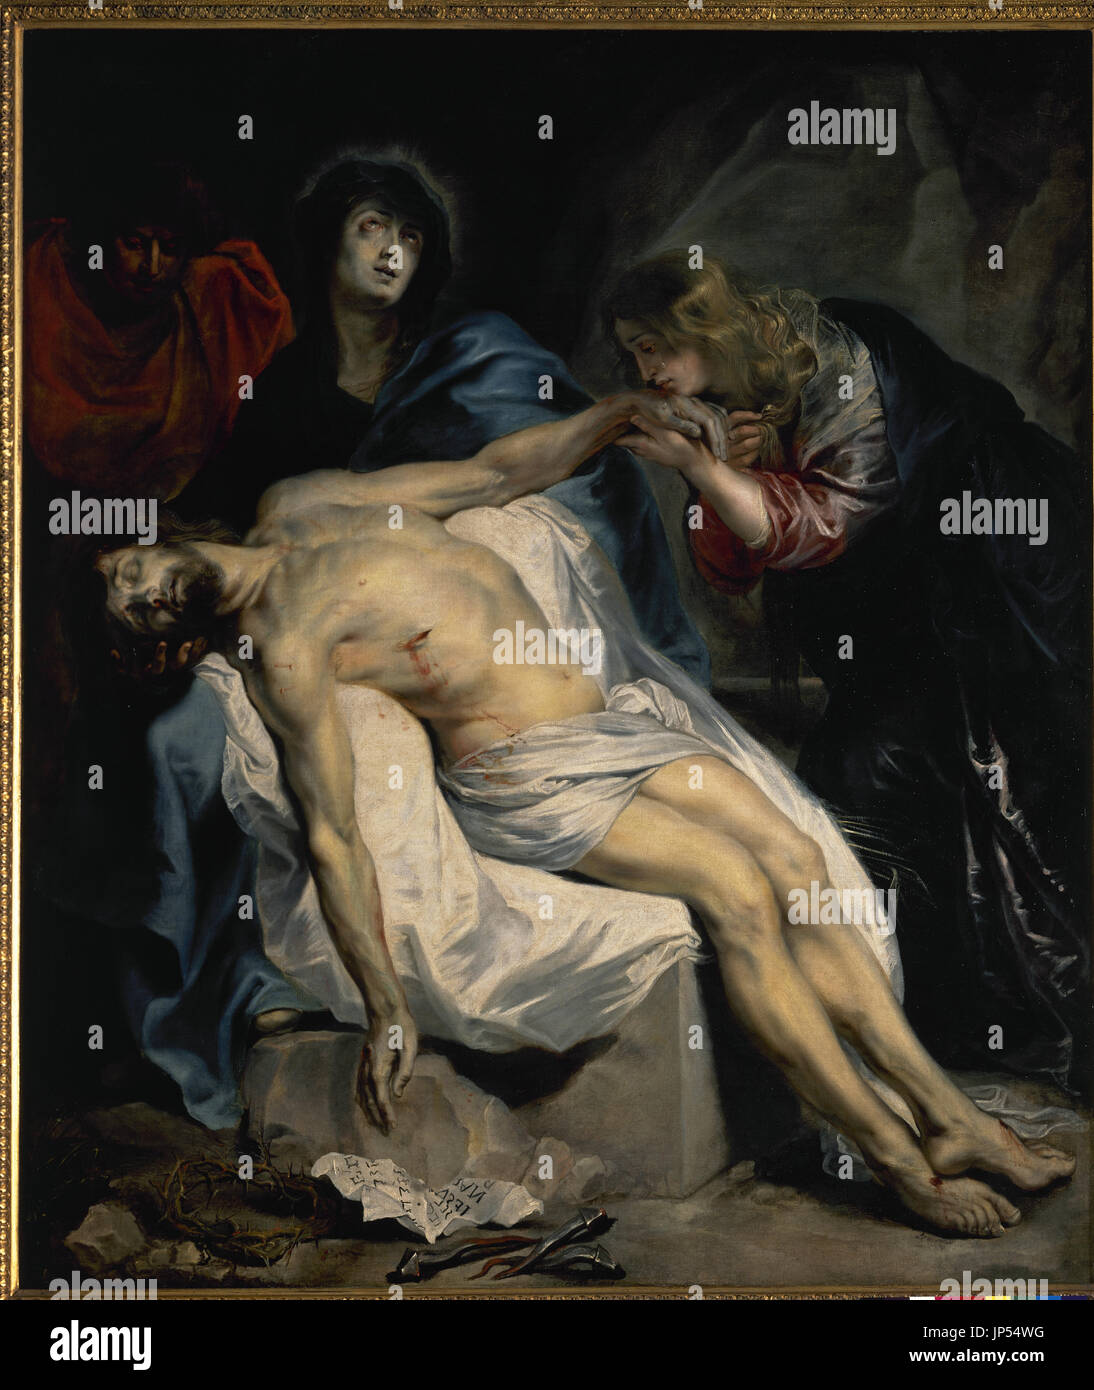 Anton van Dyckt (1599-1641). Flämischer Maler. Schade, 1618-1620. Prado-Museum. Madrid. Spanien. Stockfoto